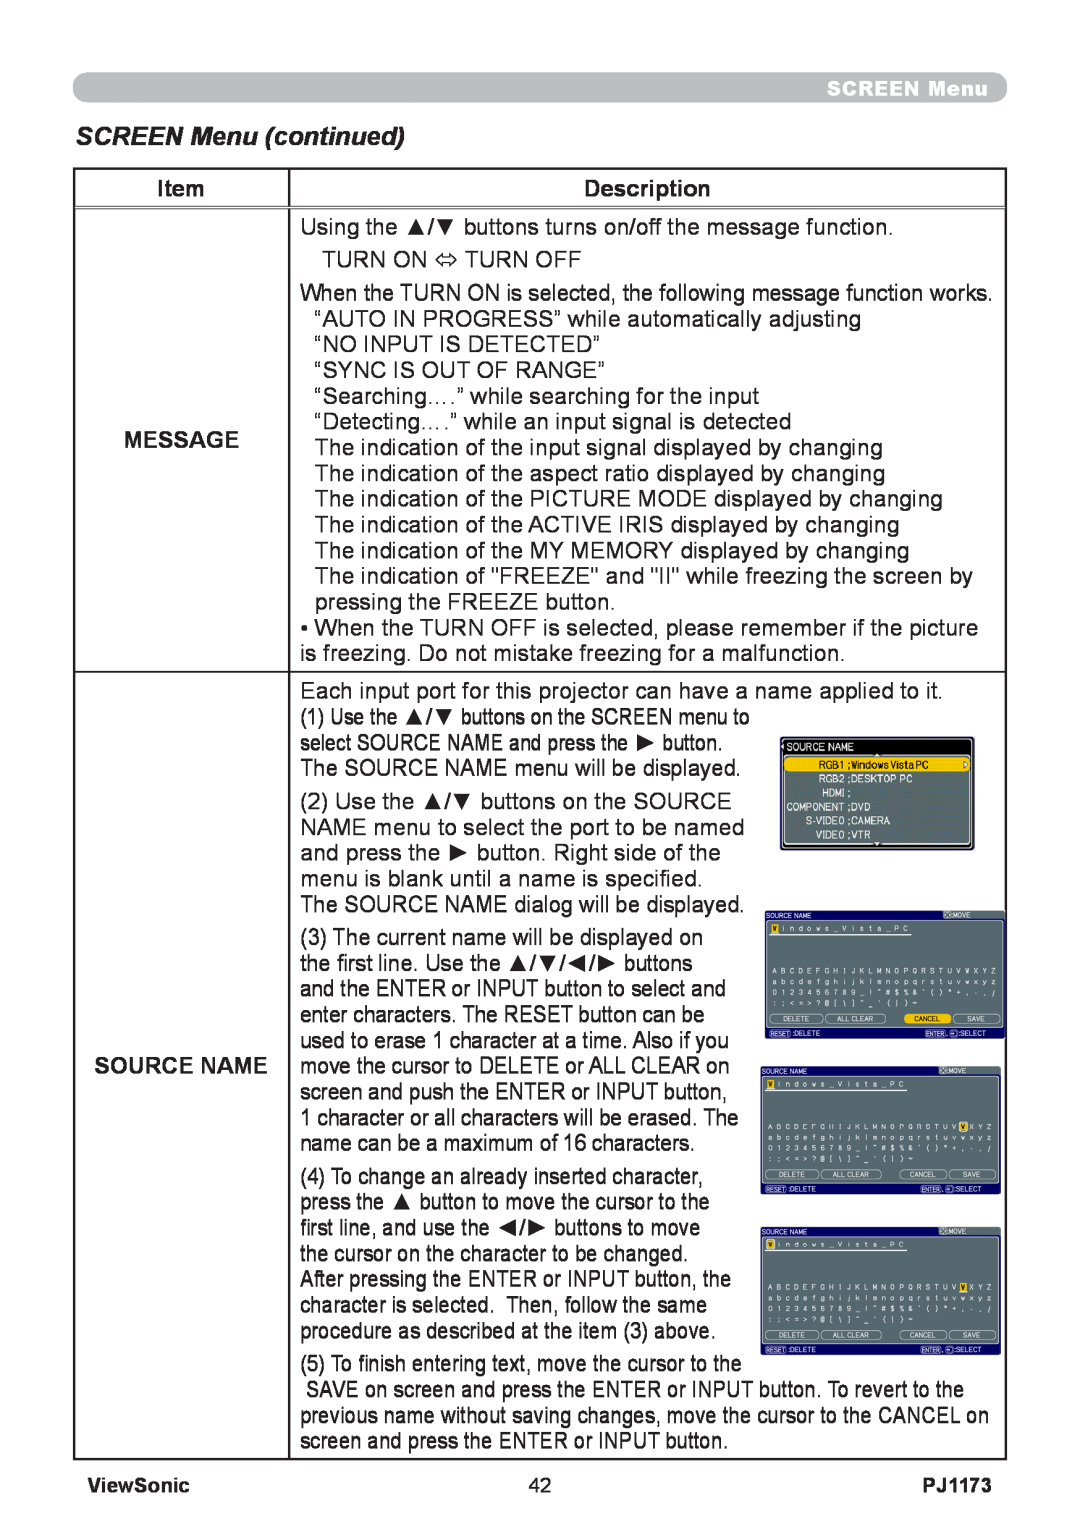 ViewSonic PJ1173, VS12109 warranty SCREEN Menu continued, Description, Message, Source Name 